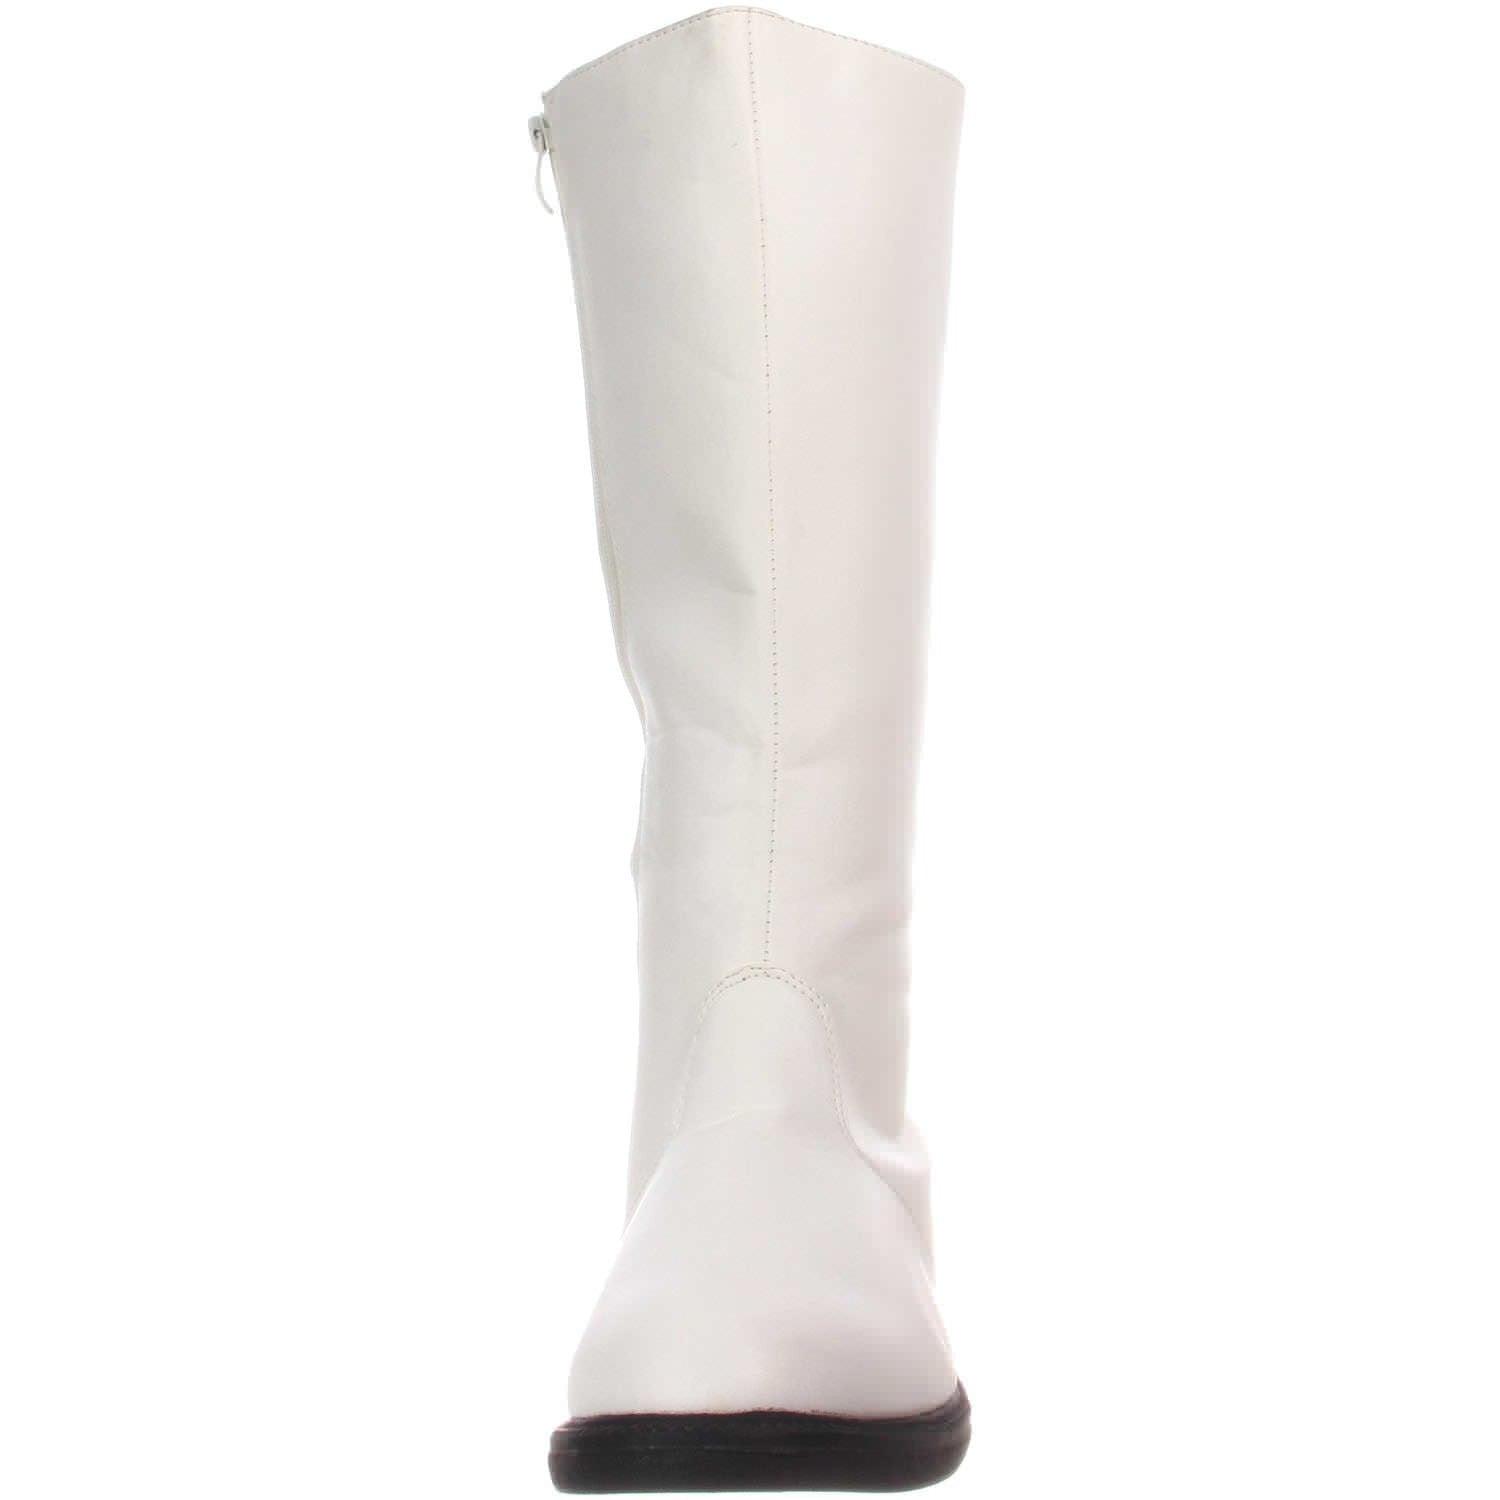 Men's White Knee High Stormtrooper Boots - Shoecup.com - 2